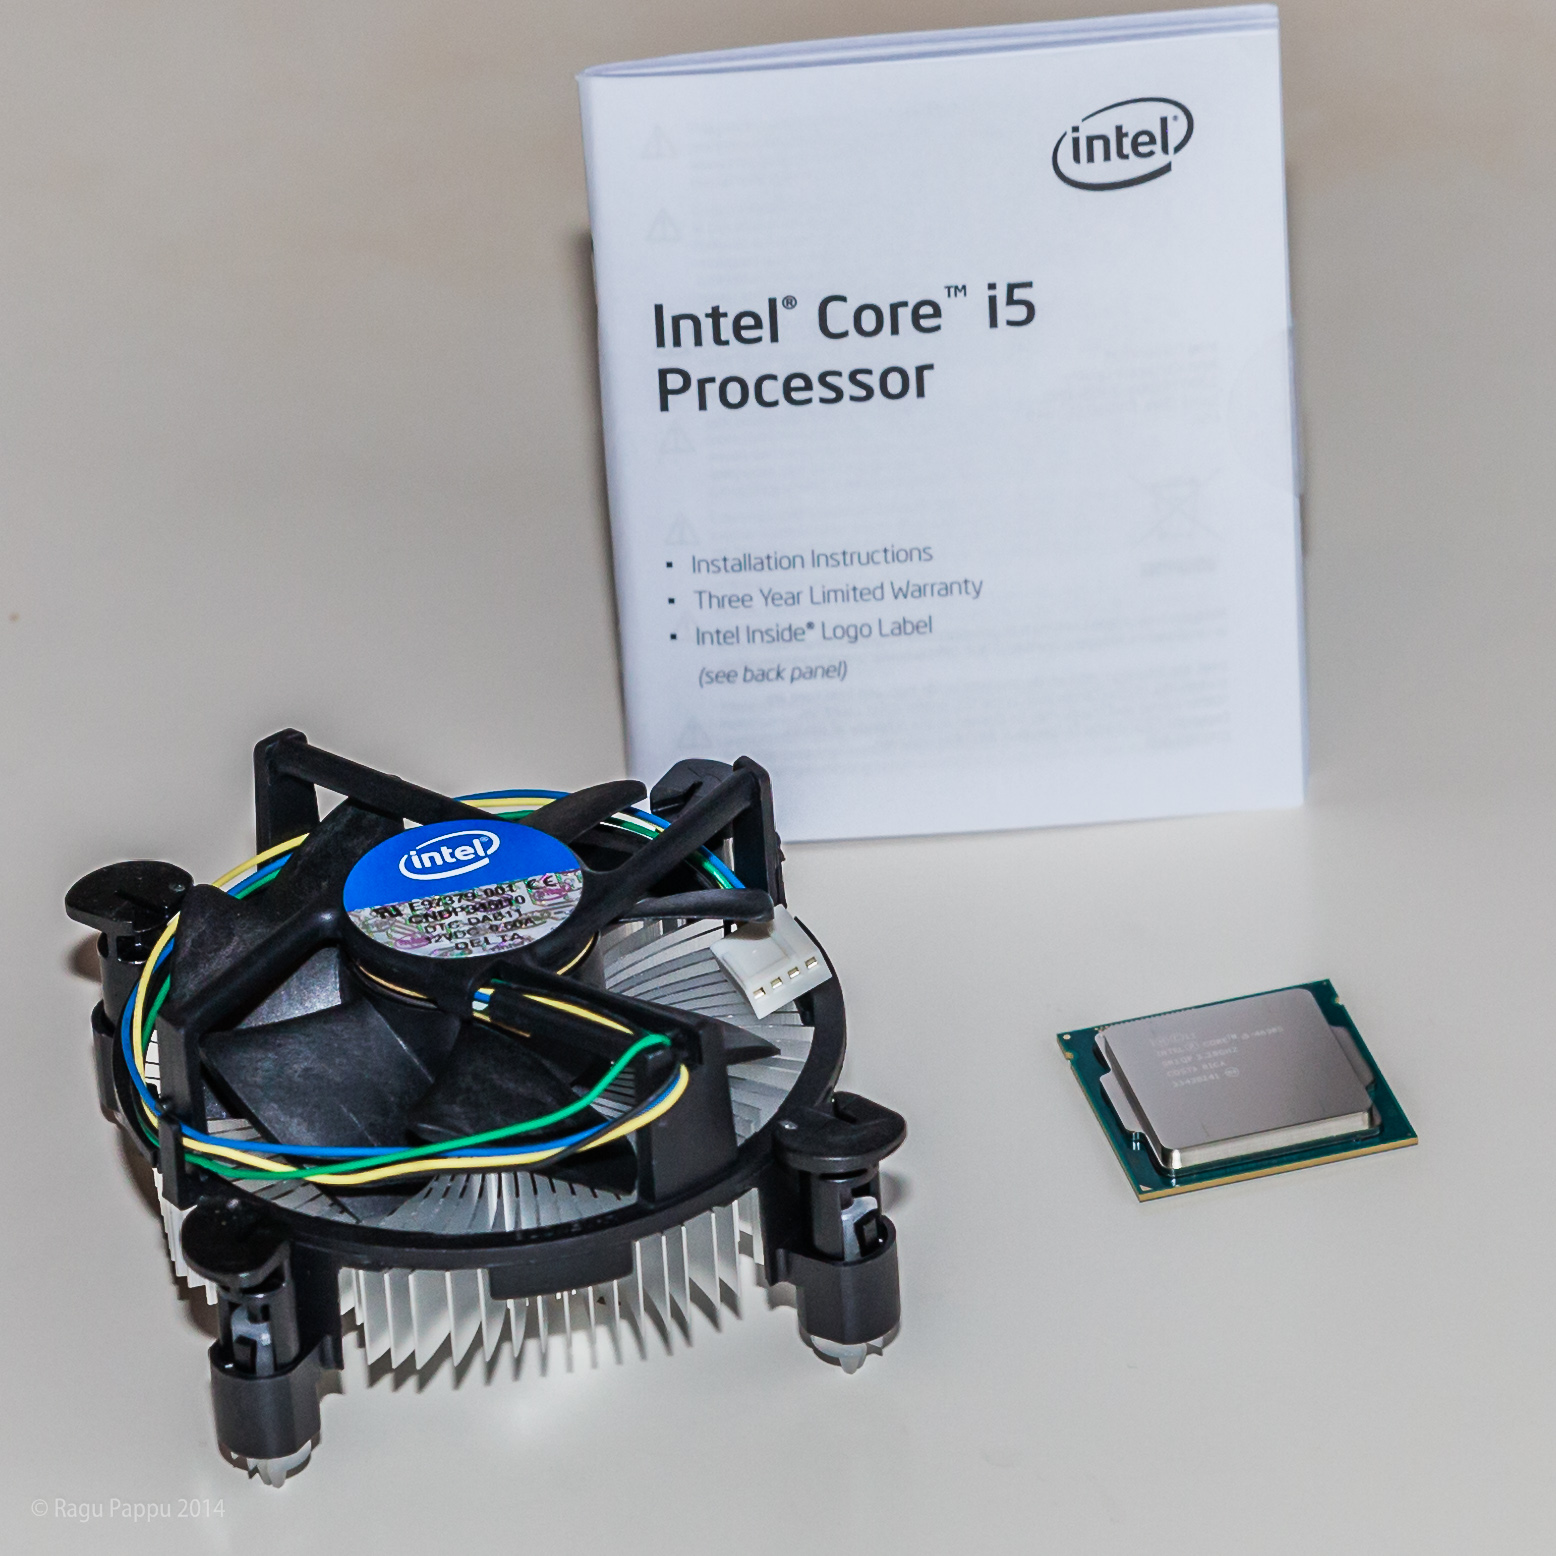 Parts inside Intel Core i5 CPU box